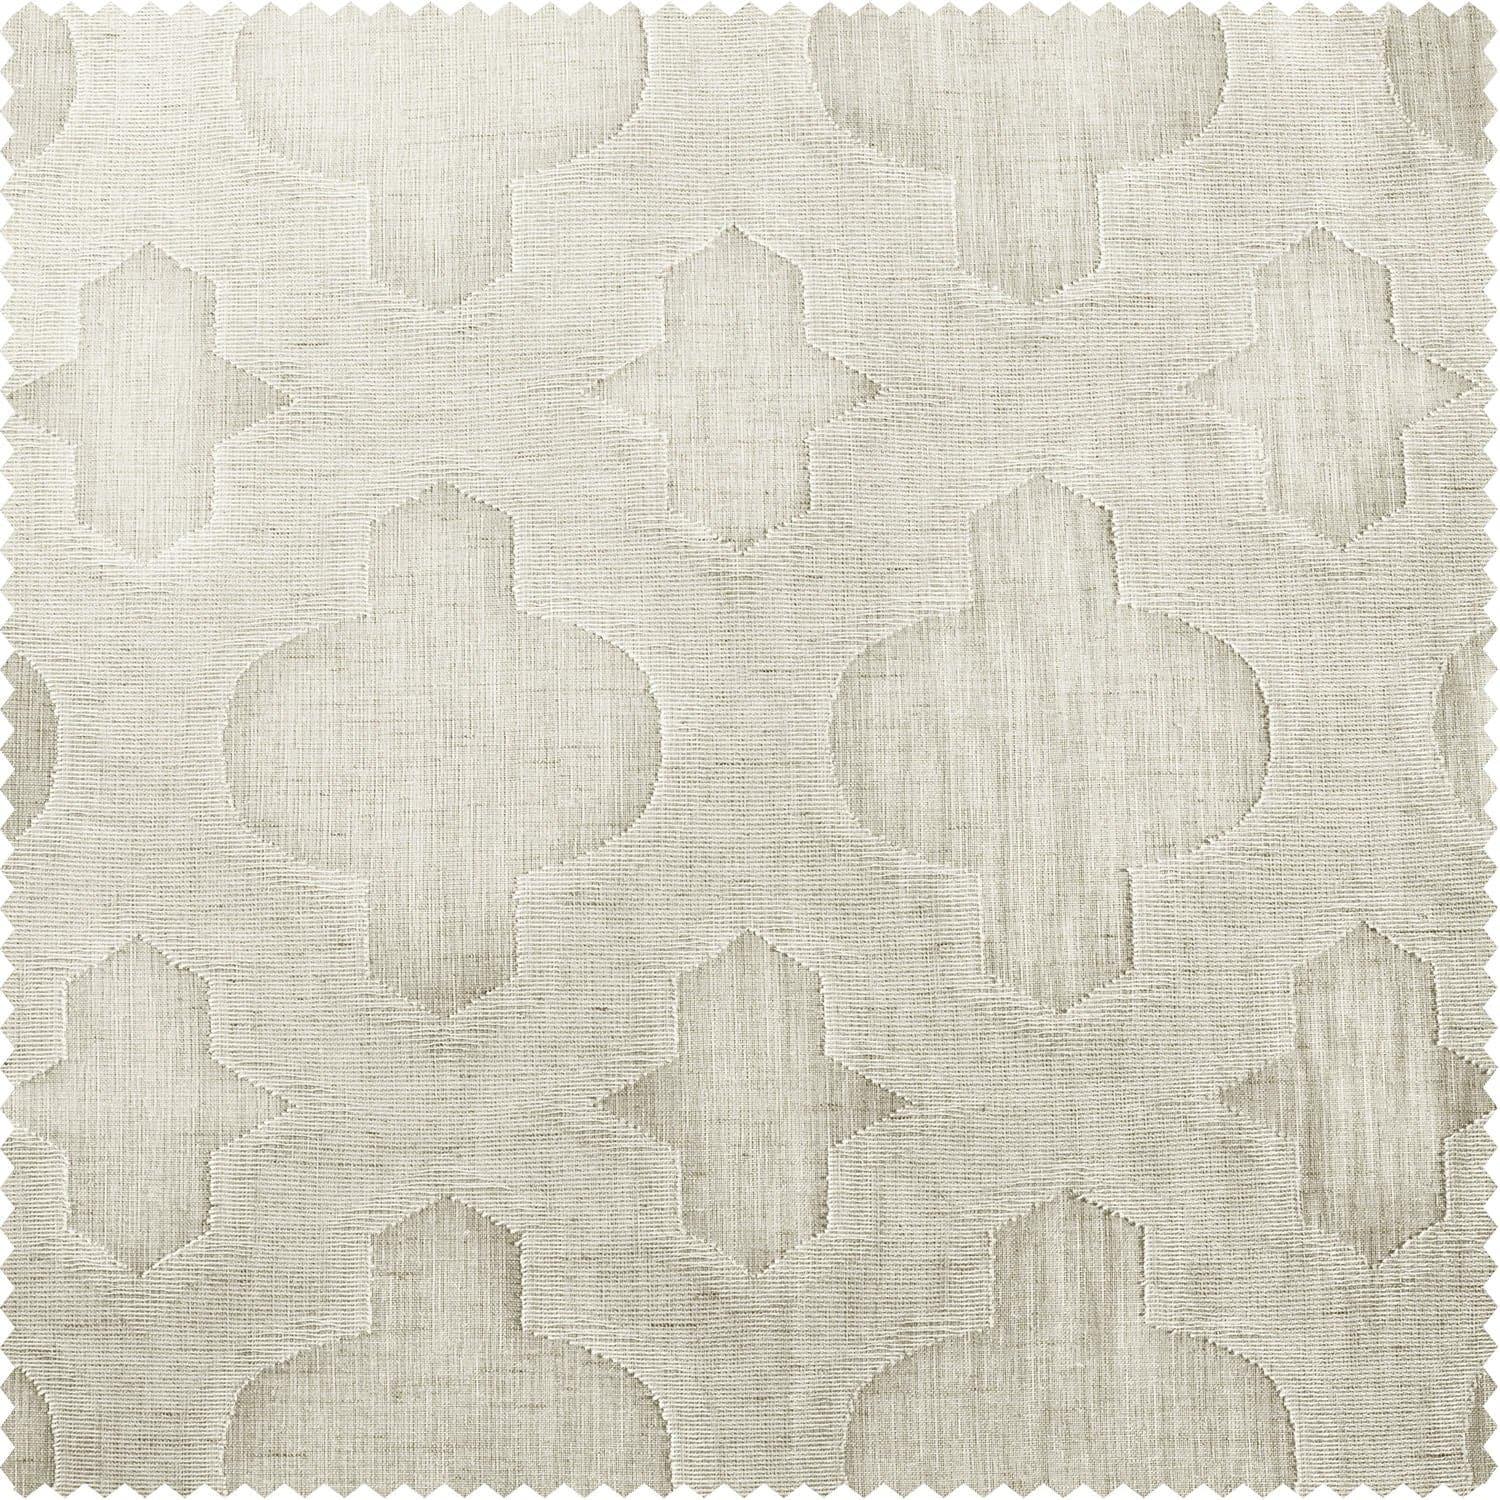 Calais Tile Cream Geometric Patterned Faux Linen Sheer Curtain